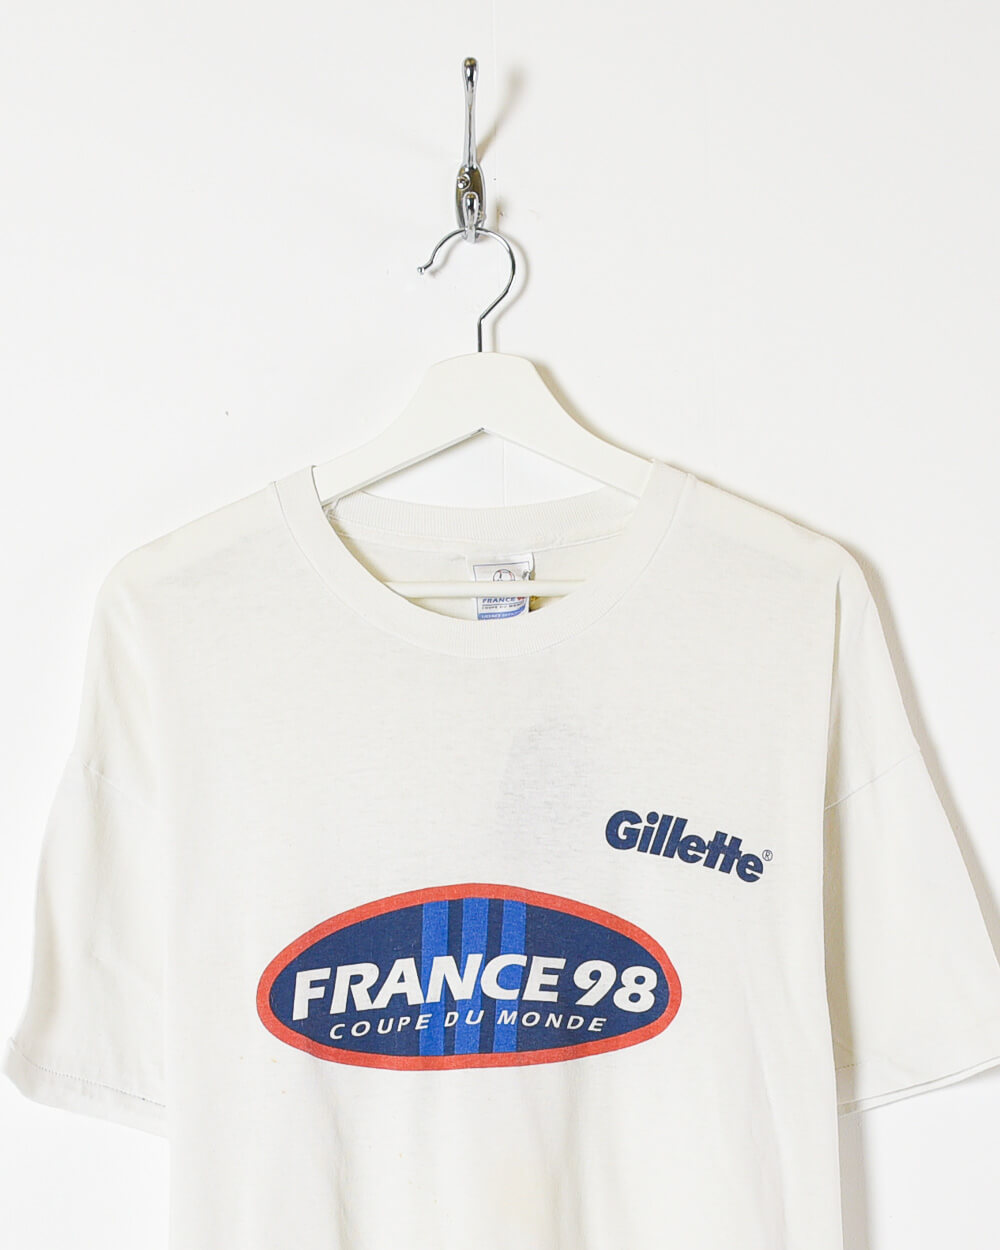 White France 98 Coupe Du Monde T-Shirt - Medium